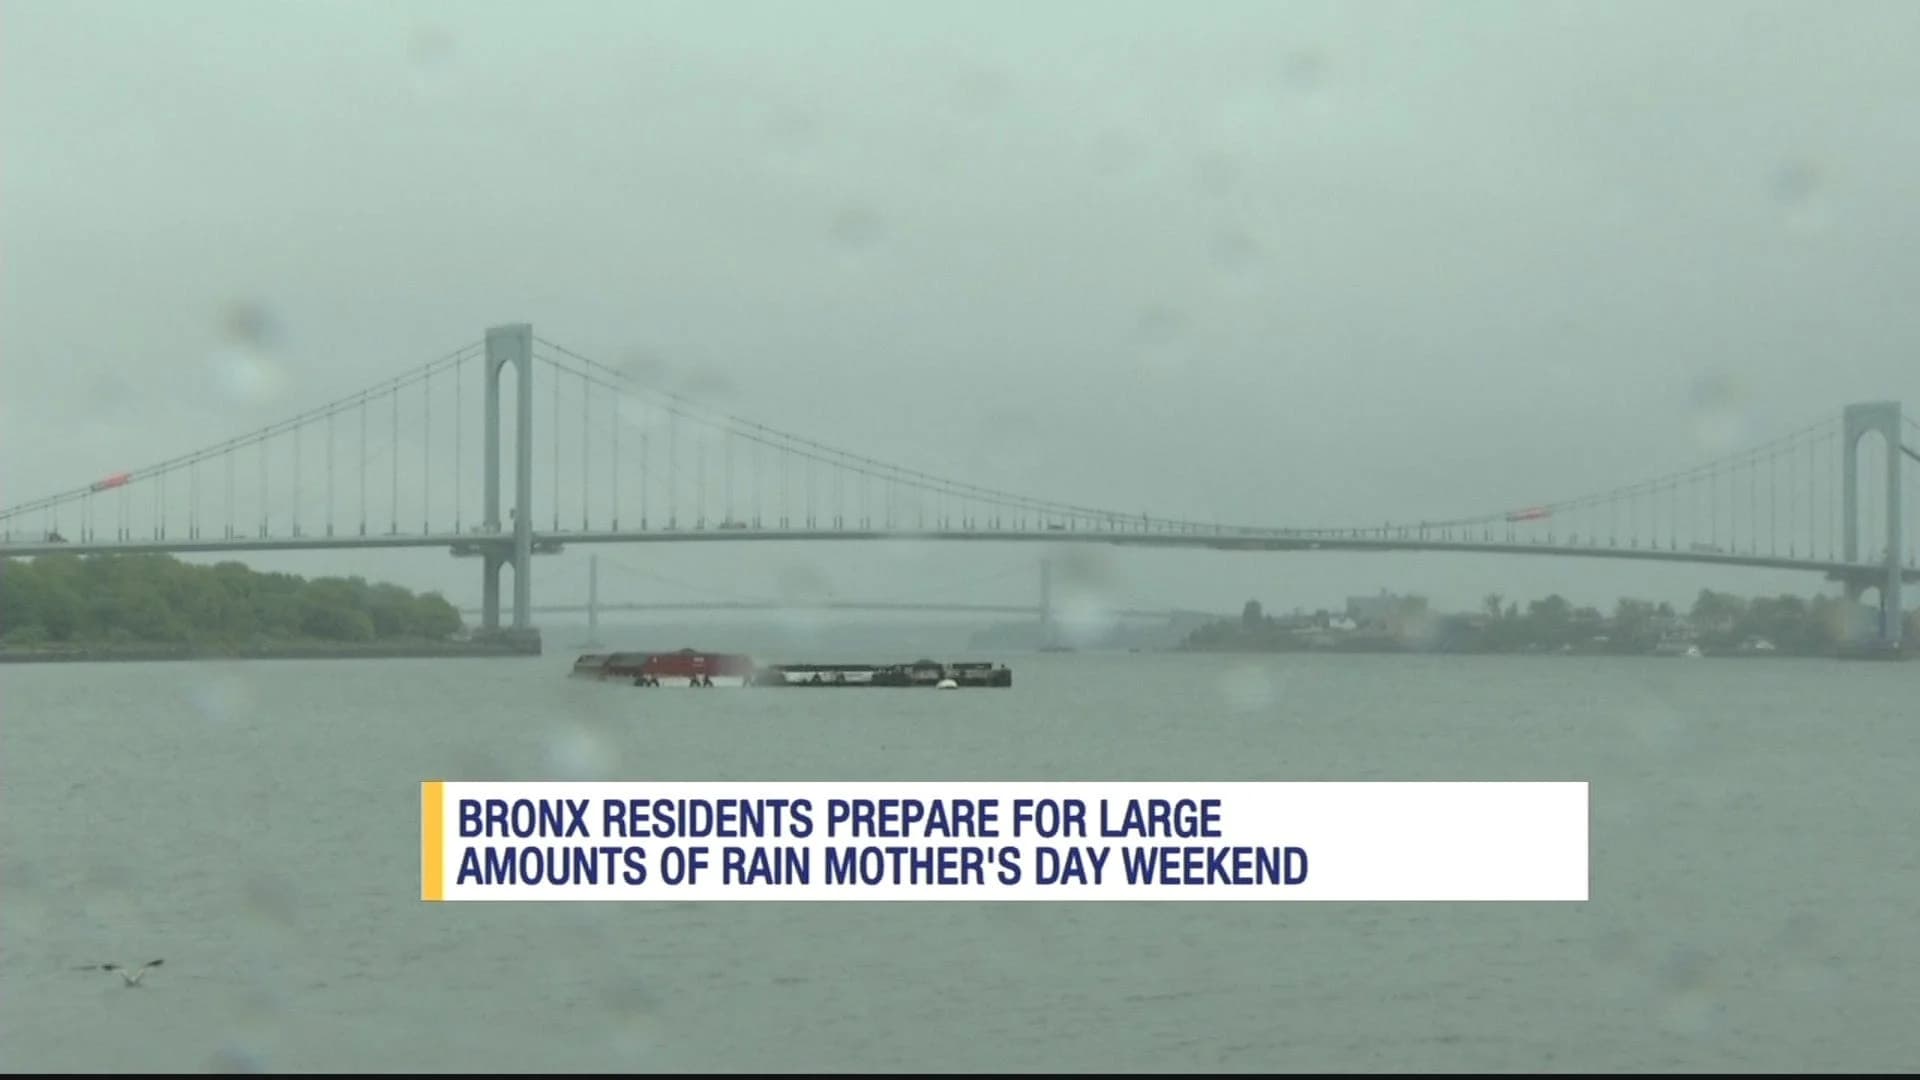 Bronx residents prep for heavy weekend rain